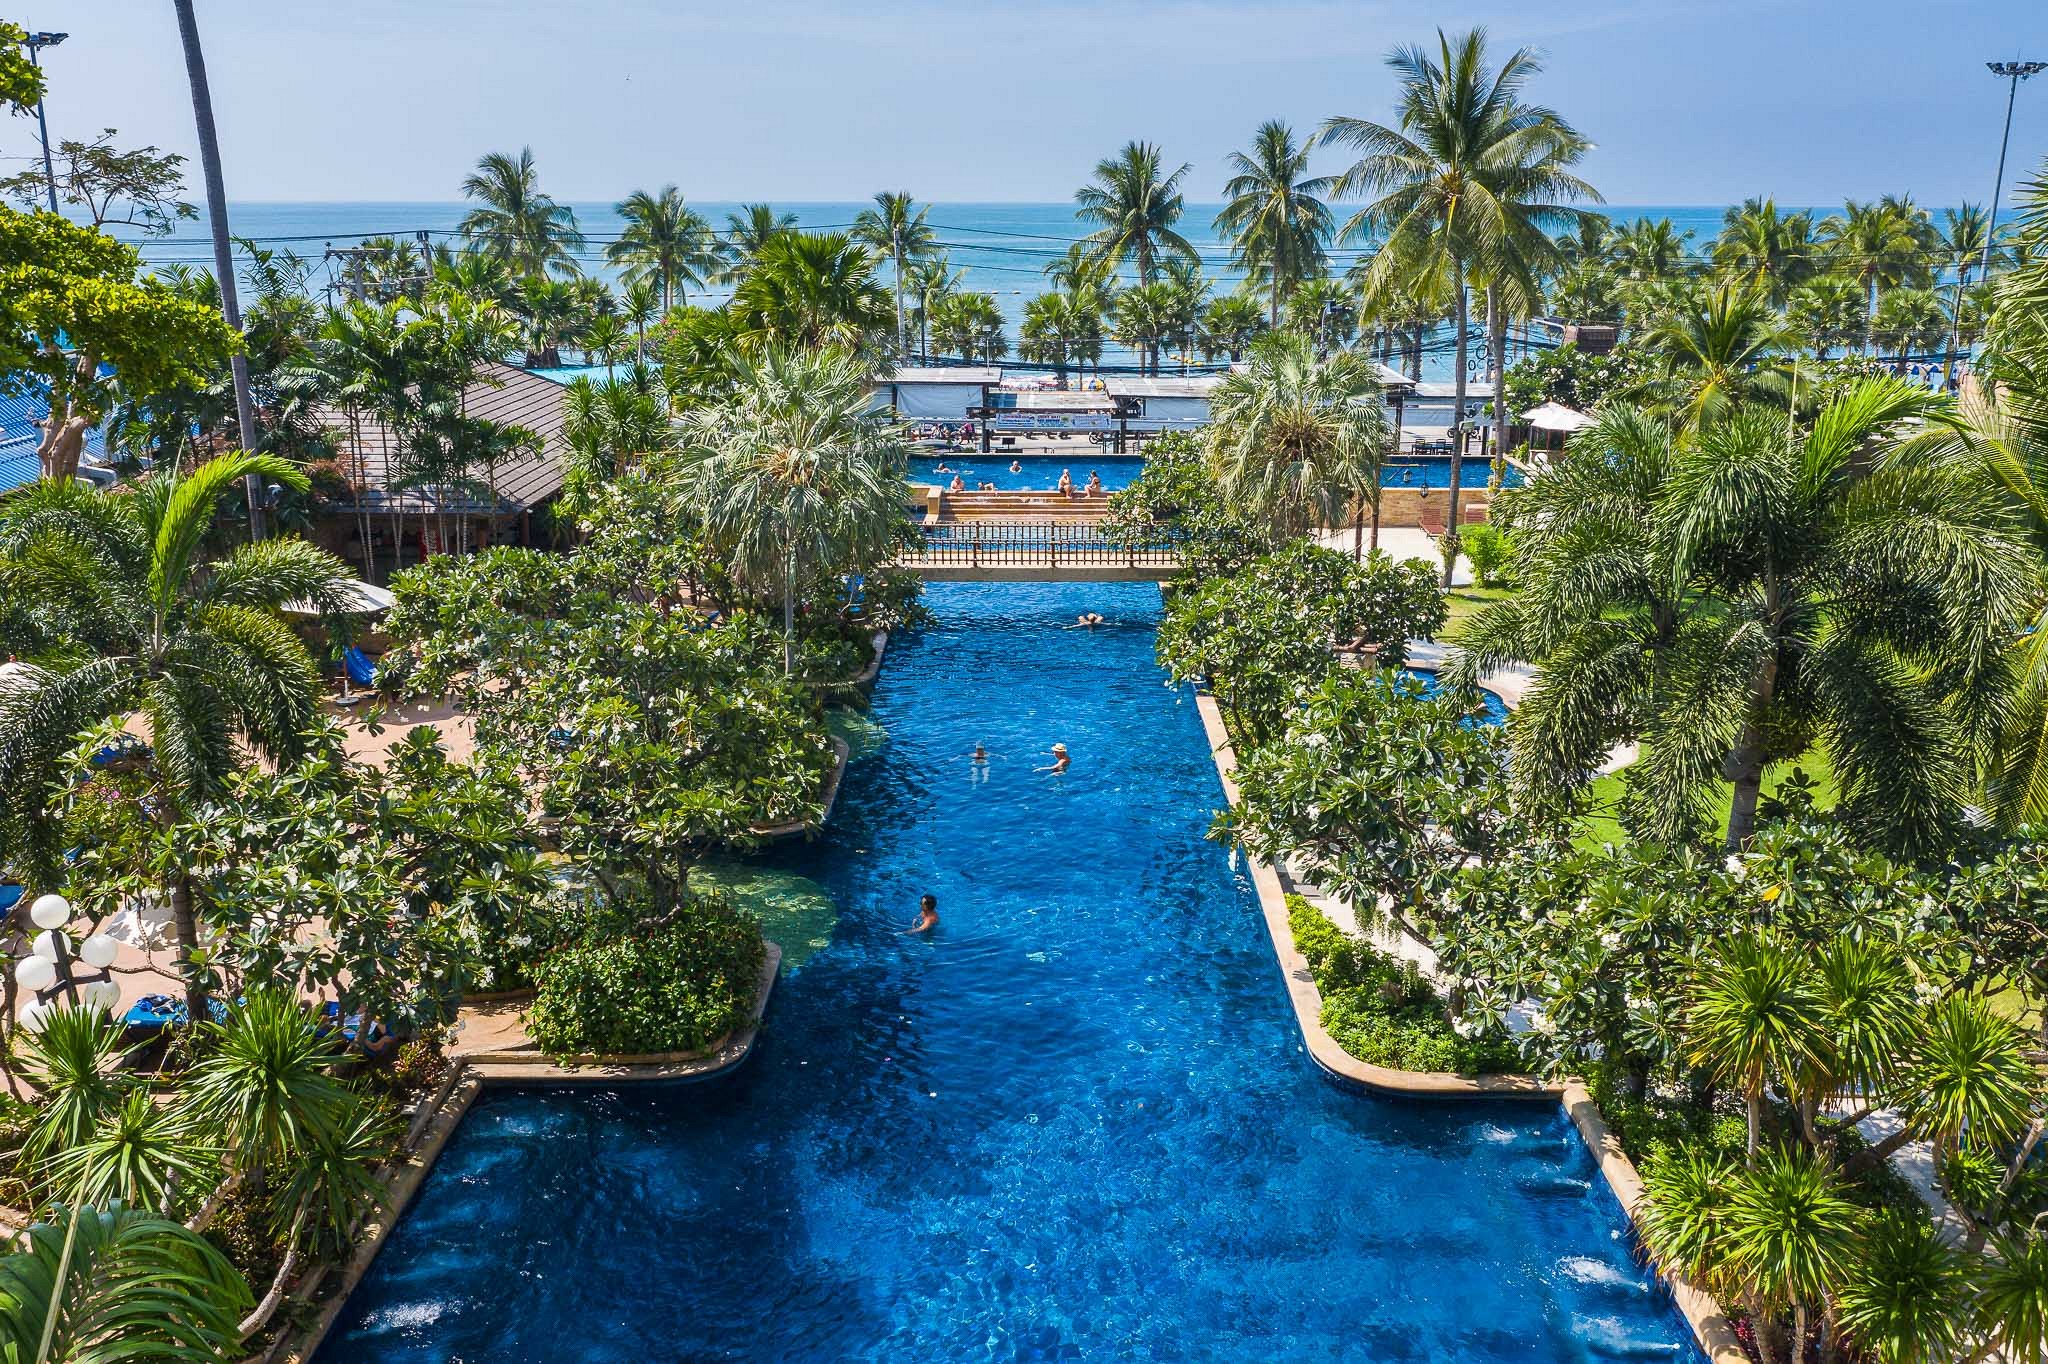 Jomtien Palm Beach Resort and Hotel